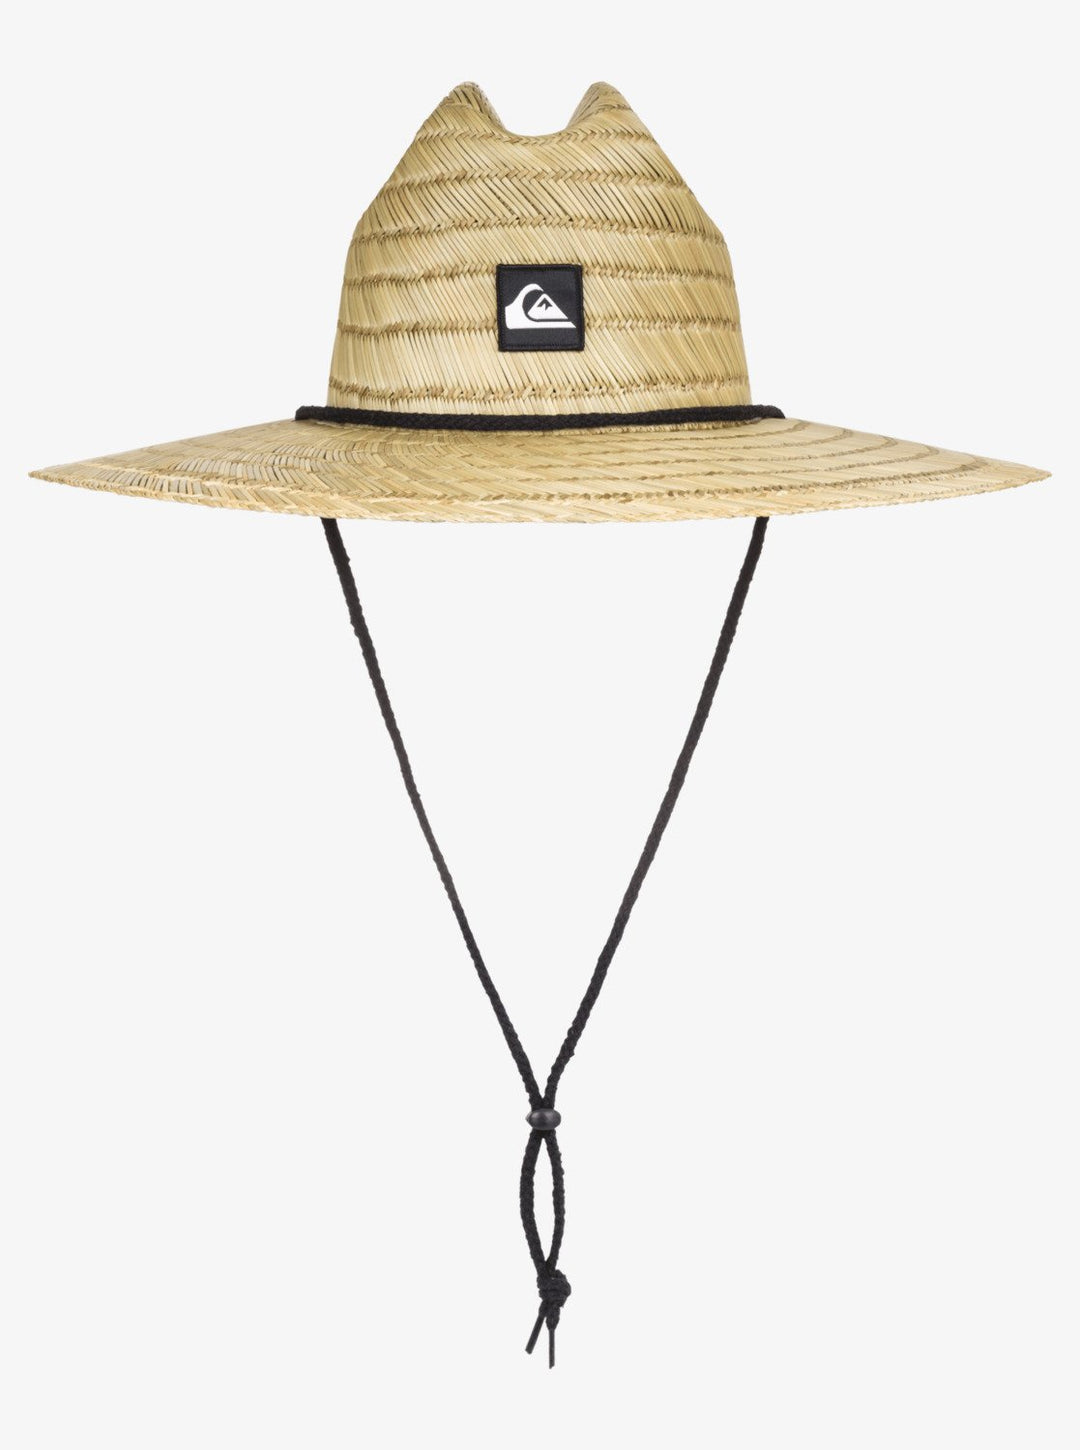 Quiksilver Pierside Straw Lifeguard Hat - Natural - Sun Diego Boardshop